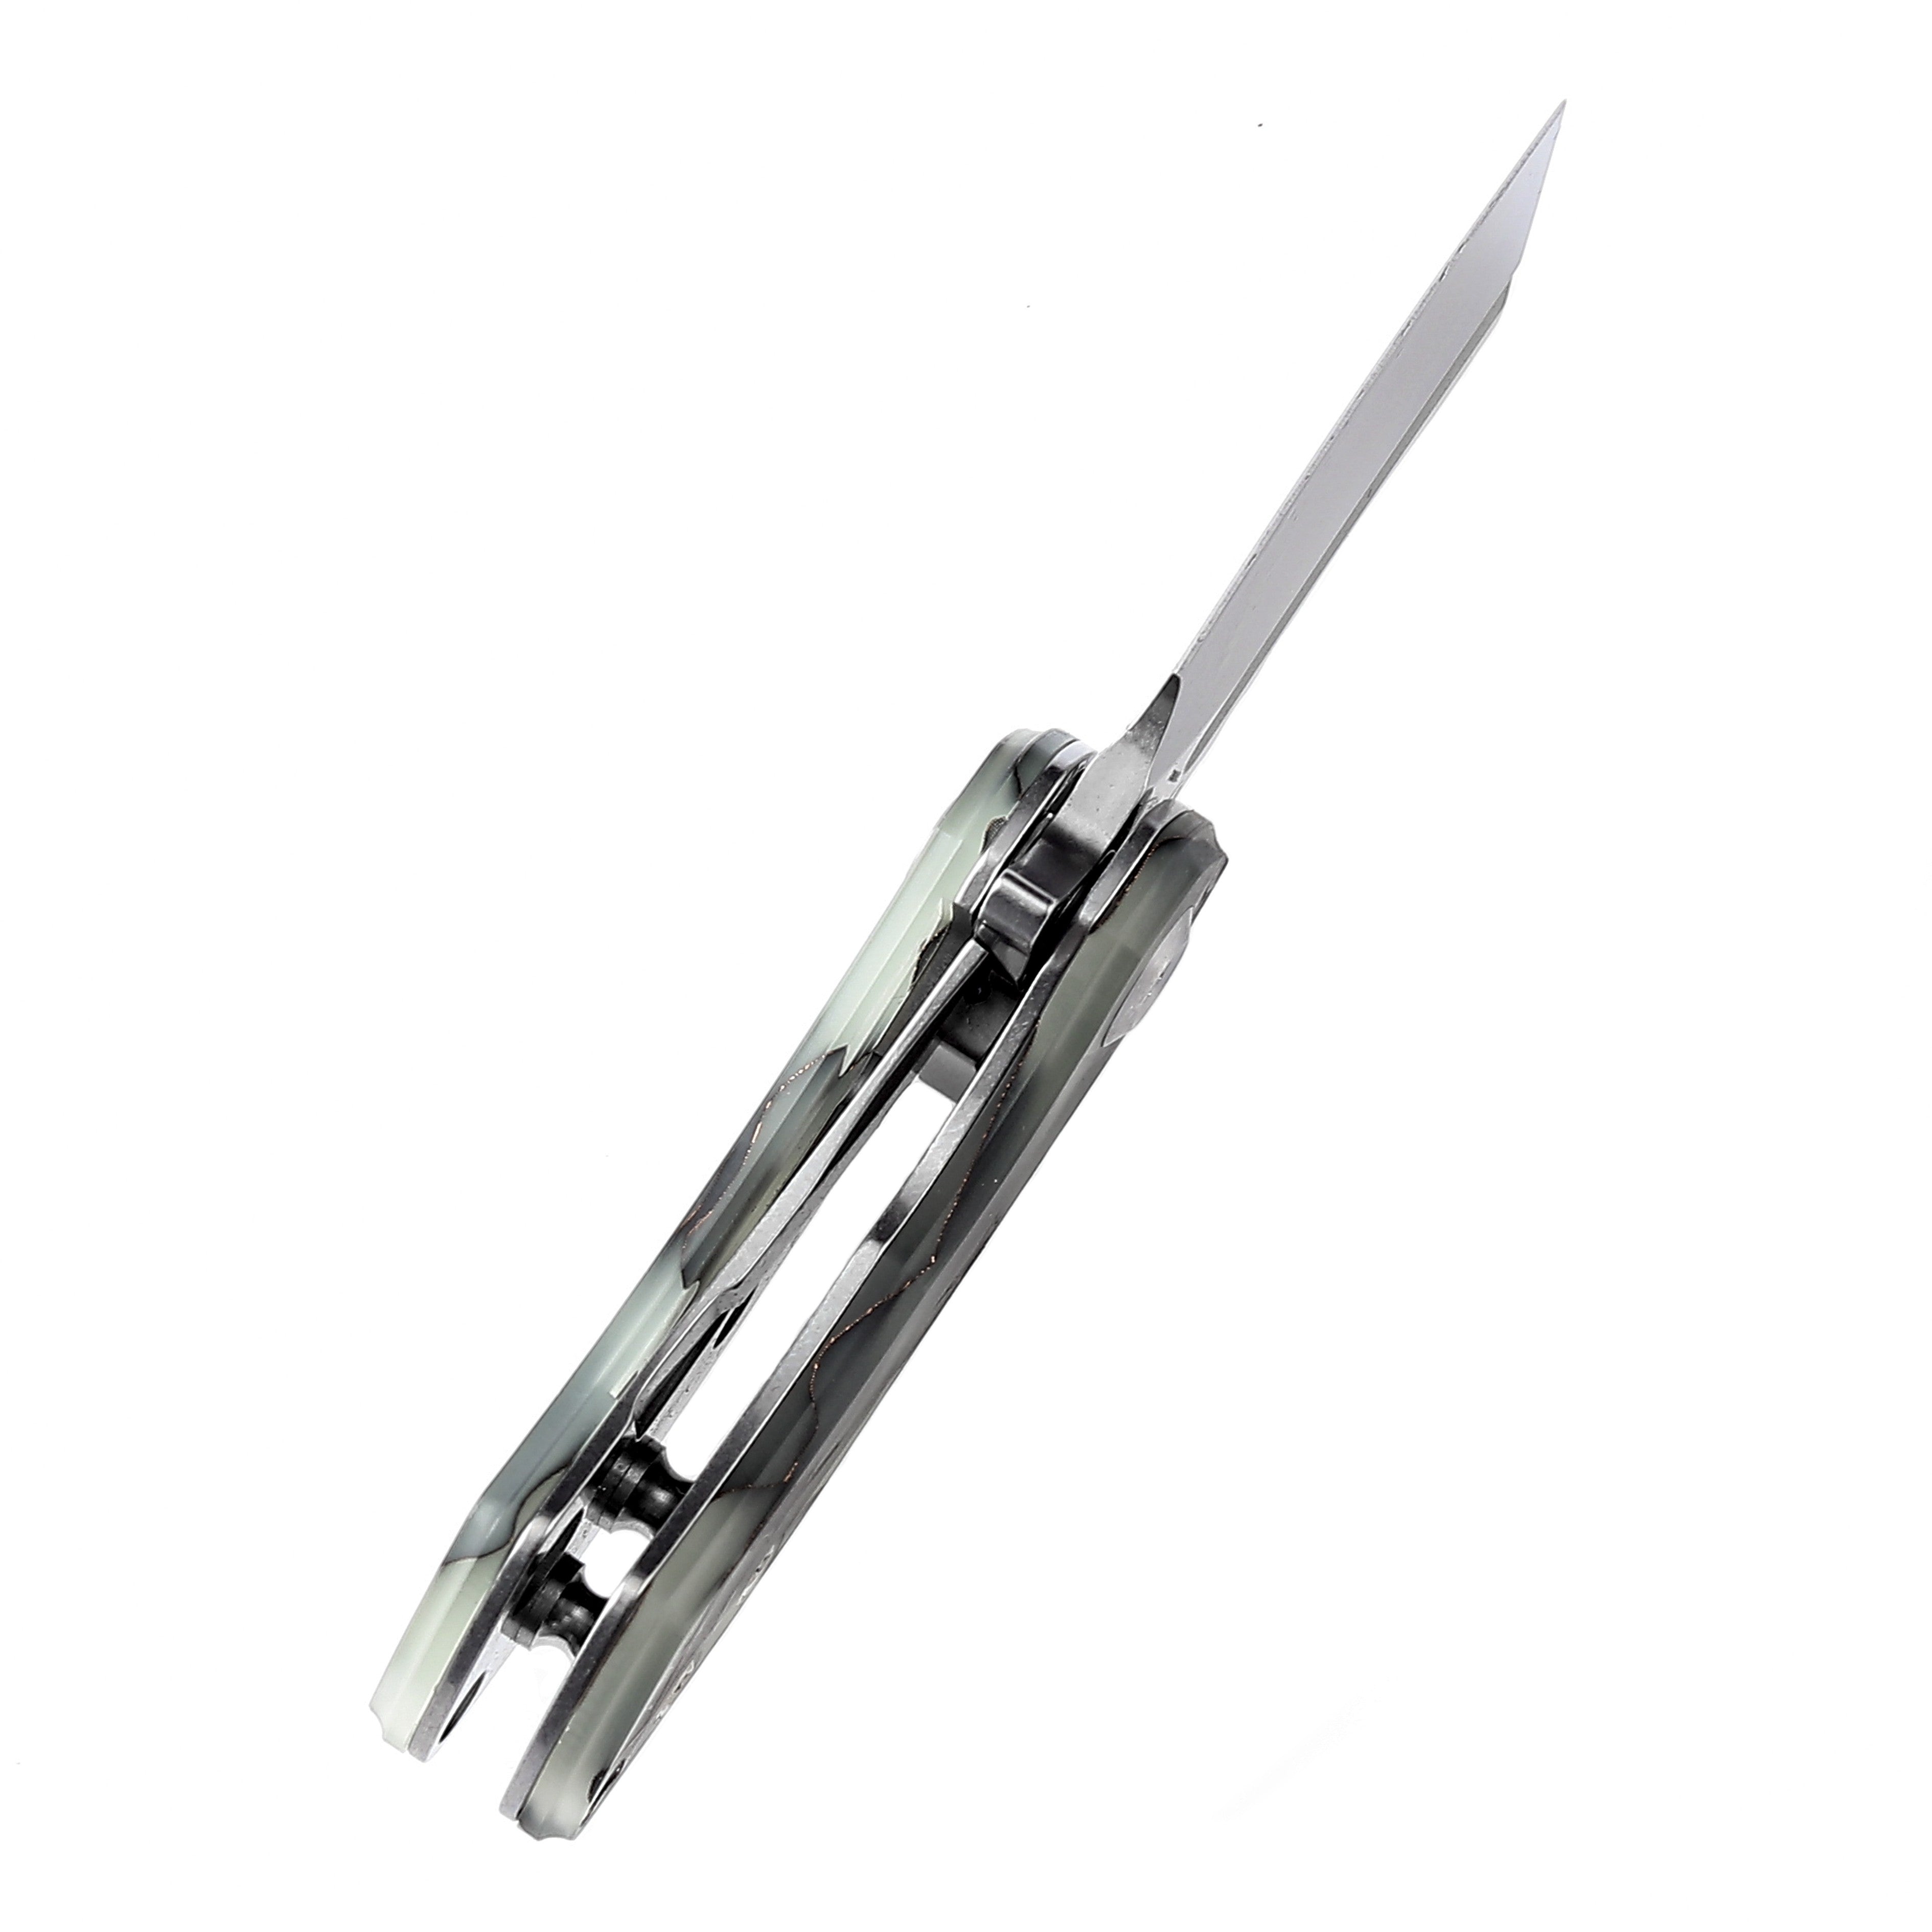 Kansept Knives T3030B5 Mini Korvid 154CM Blade Luminous Resin Handle Liner Lock Edc Knives